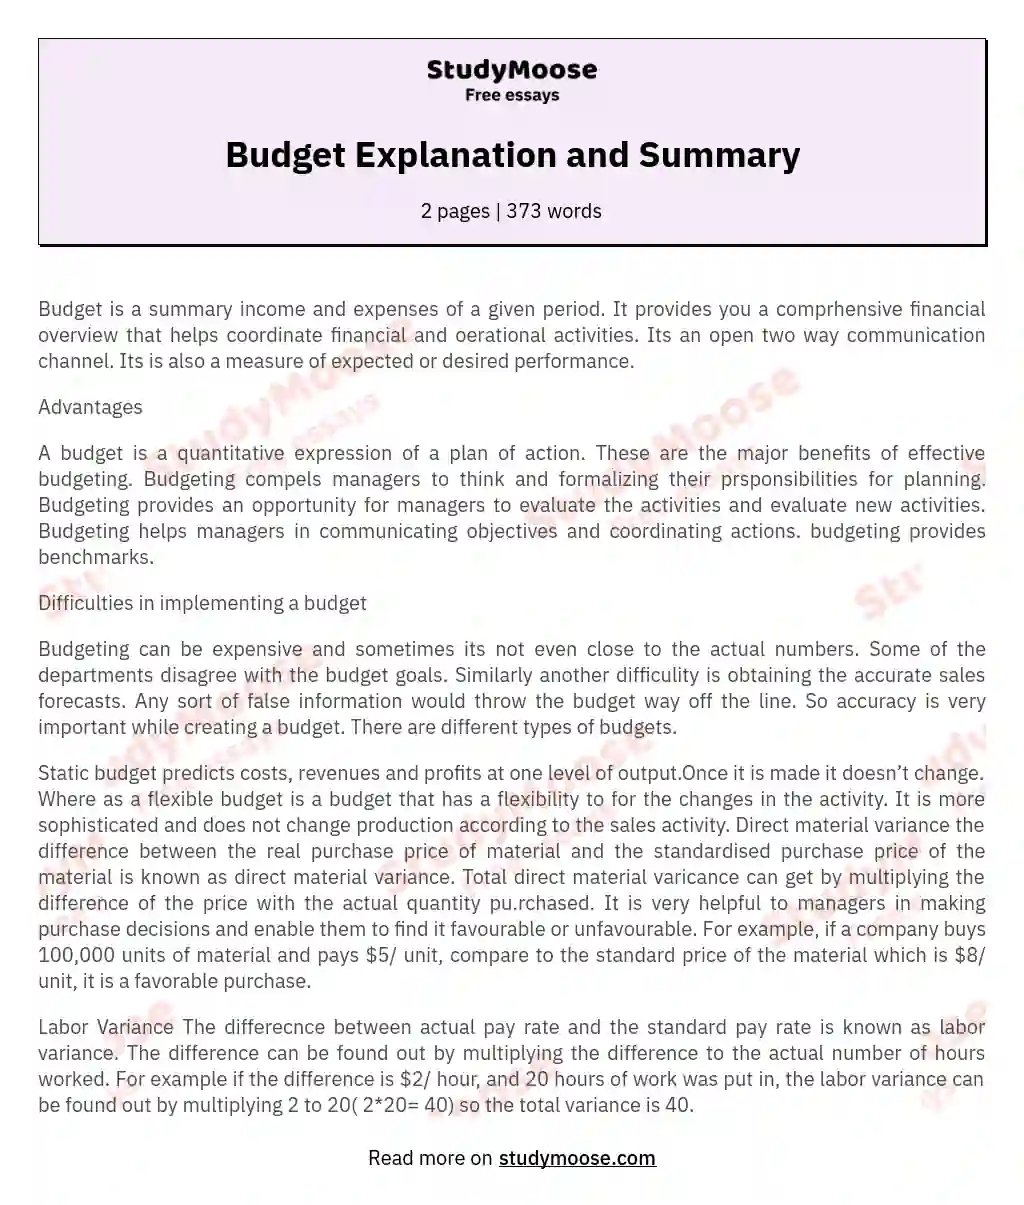 Budget Explanation and Summary essay